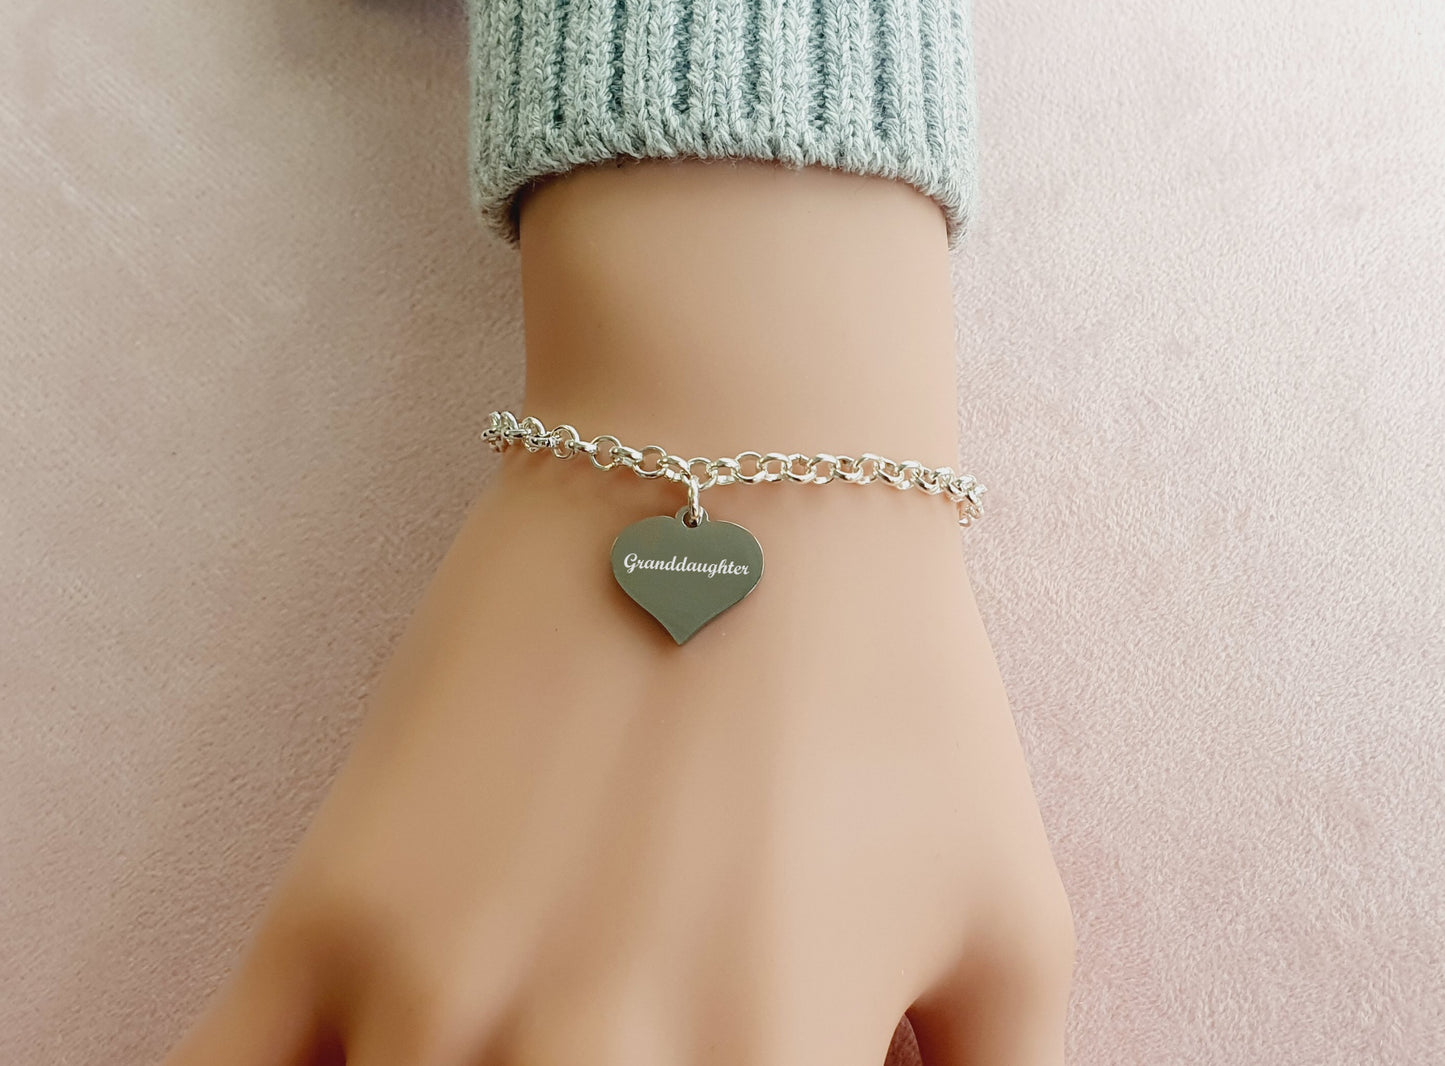 Granddaughter Engraved Heart Charm Link Bracelet, Personalised Bracelet, Message Jewellery